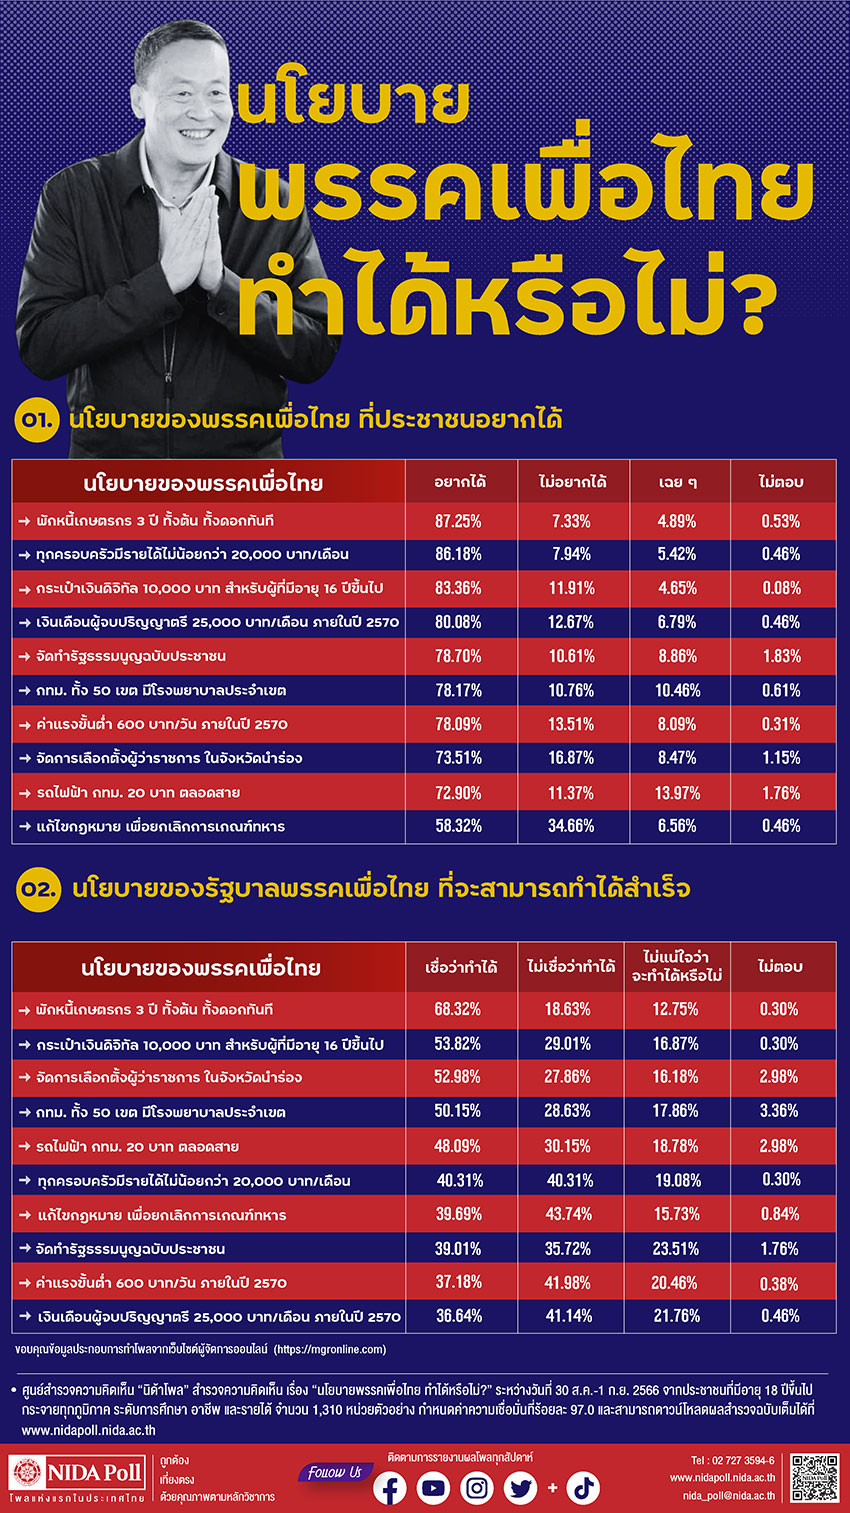 NIDA Poll นโยบายพรรคเพื่อไทย ทำได้หรือไม่?